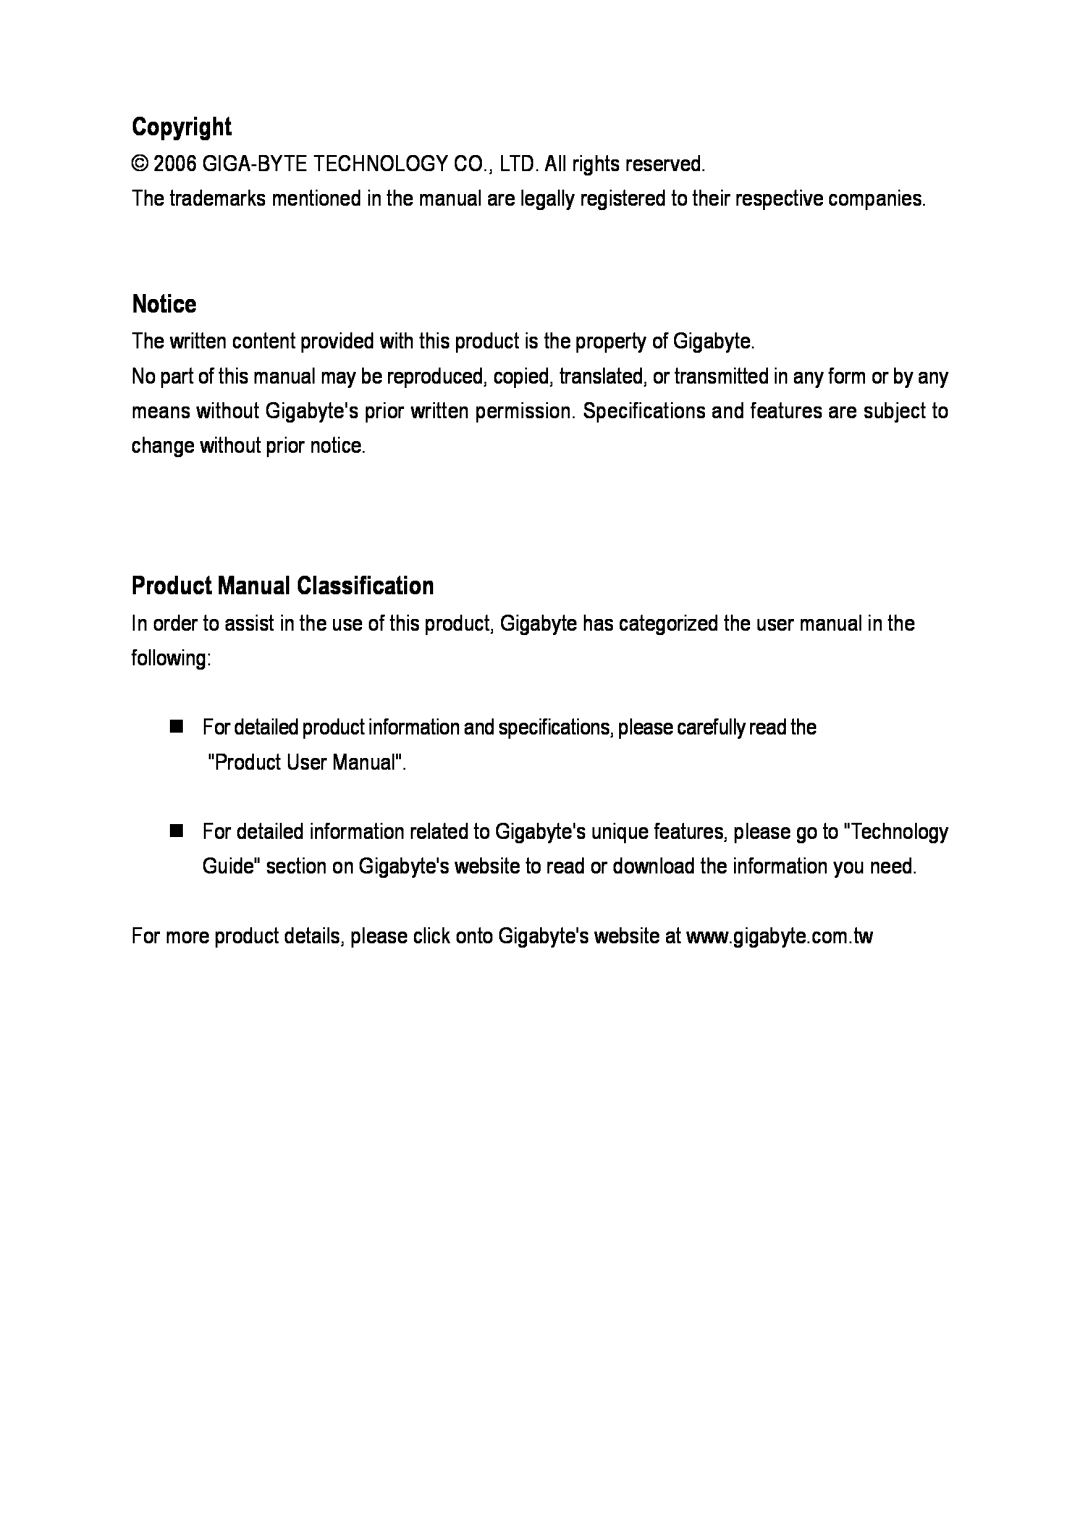 Gigabyte GA-945PLM-(D)S2 user manual Copyright, Product Manual Classification 